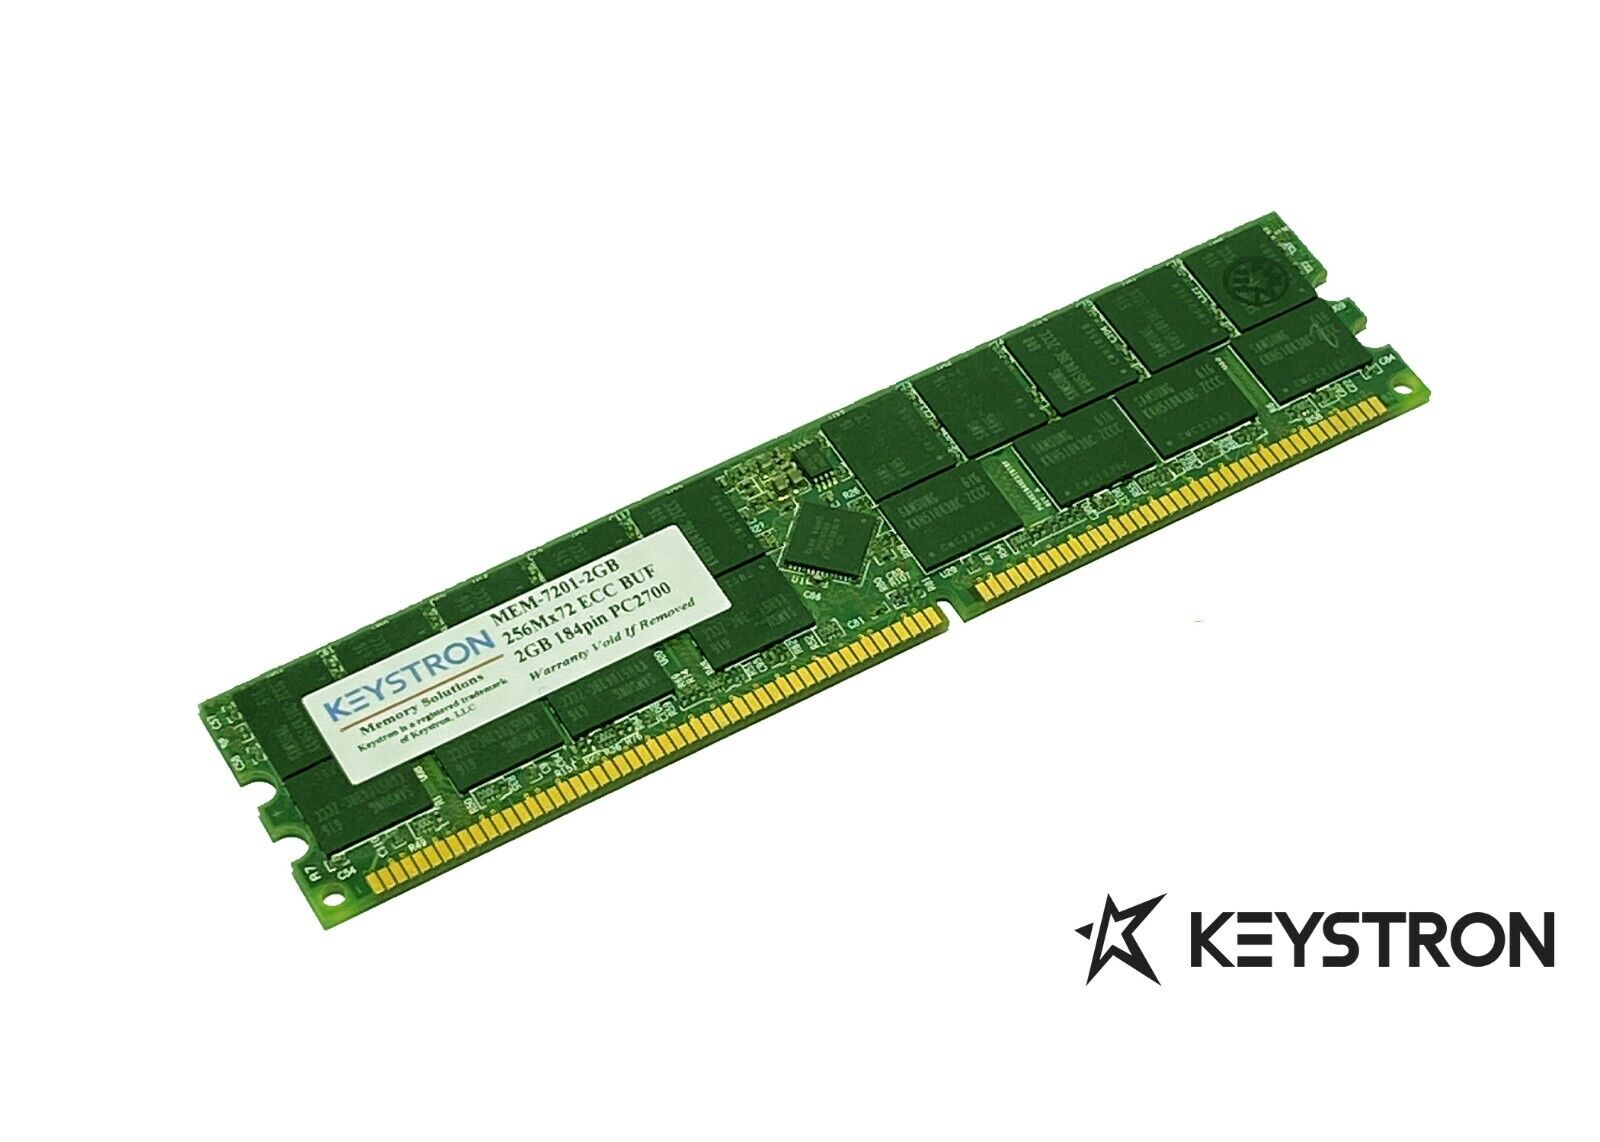 MEM-7201-2GB 2GB COMPATIBLE DRAM MAIN MEMORY FOR CISCO 7201 SERIES NPE-G2